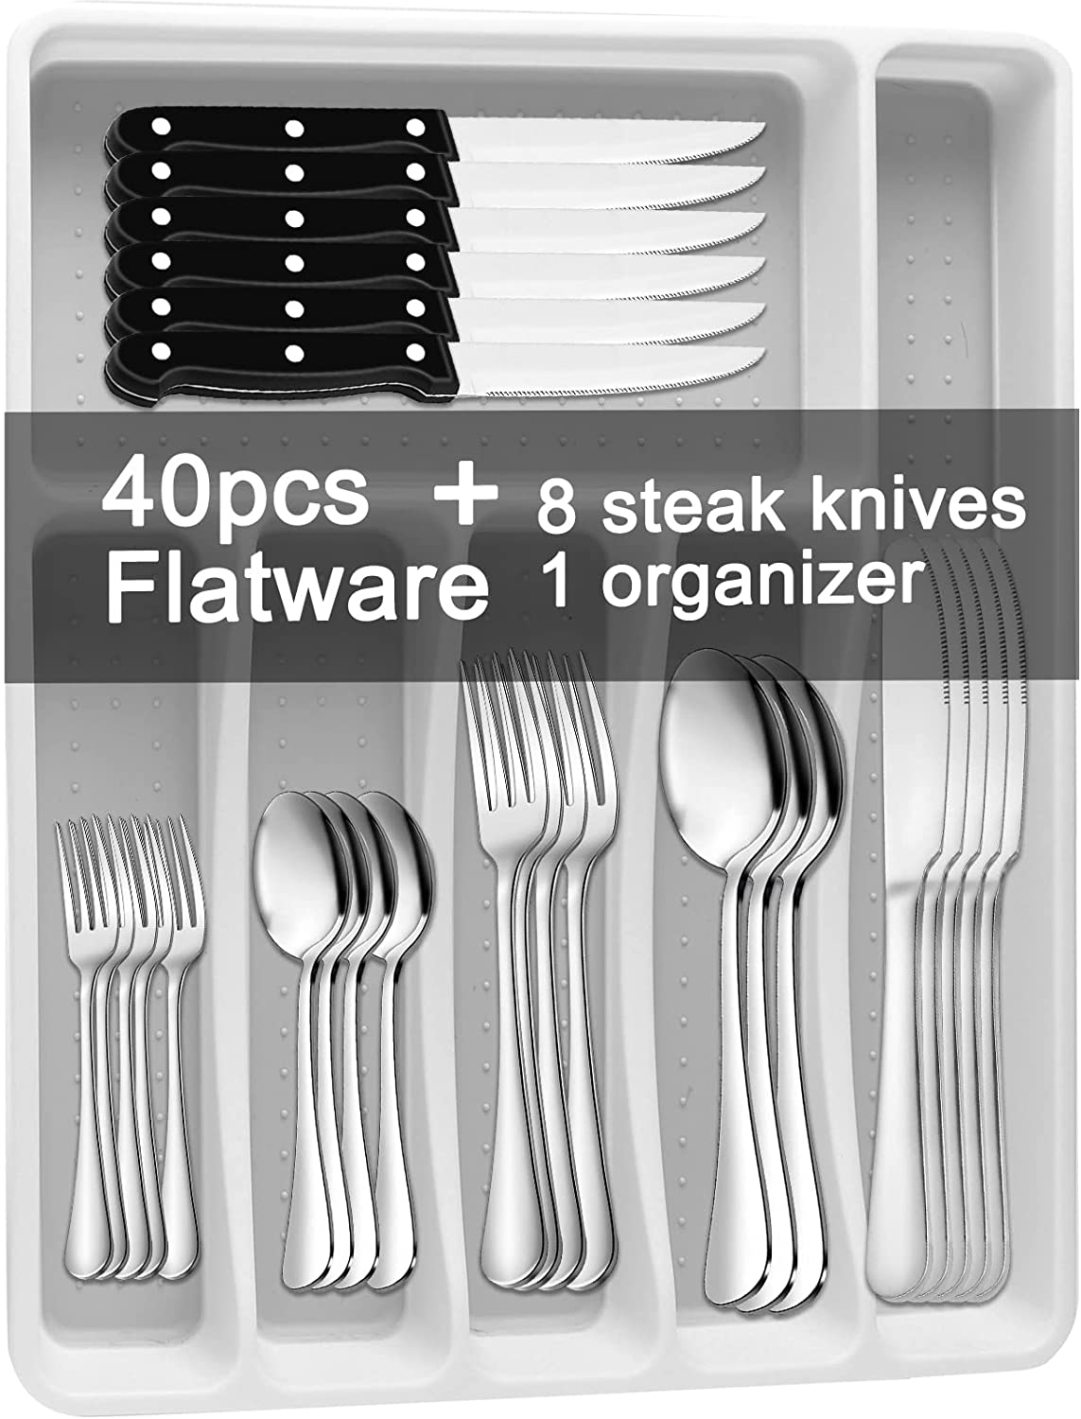 Silverware Set with Steak Knives 36-Piece Stainless Steel Flatware Set,  Kitchen Cutlery Set for 6, Include Steak Knife/Fork/Spoon, Dishwasher Safe